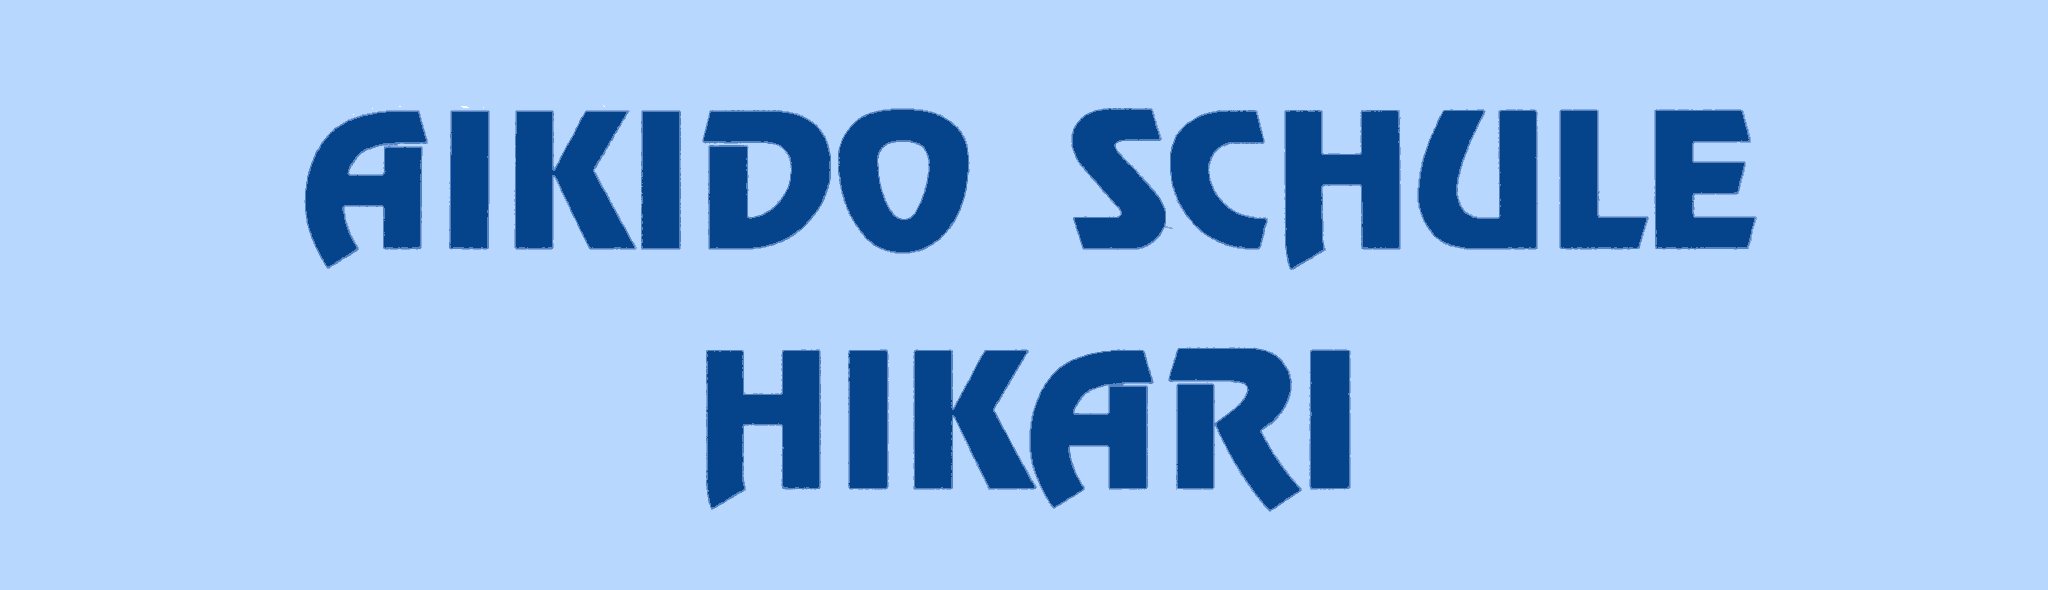 Aikido Schule Hikari